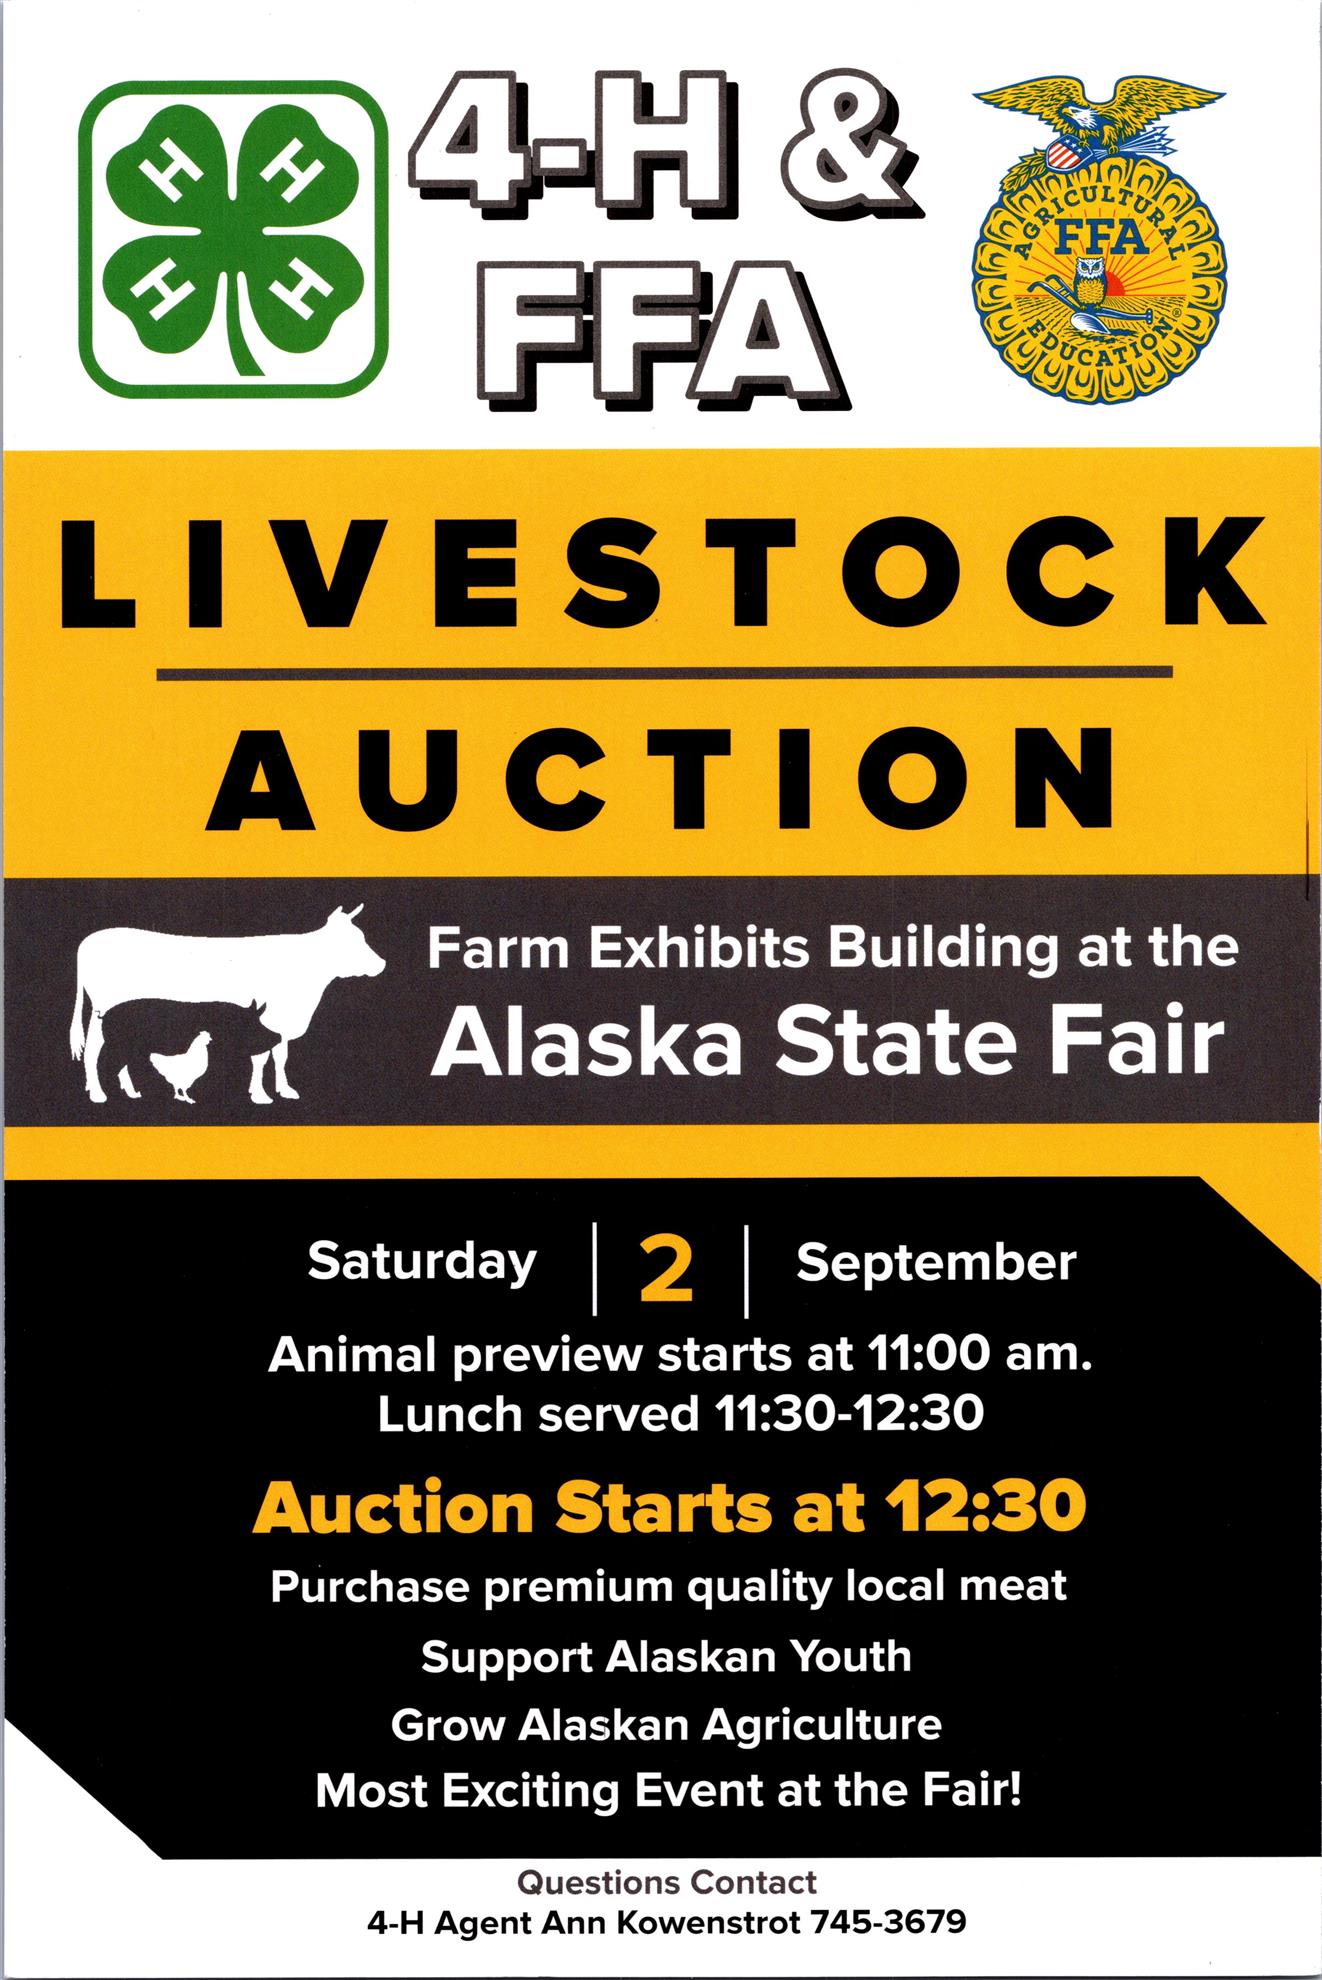 Arctic Agriculture: What's FFA Like in Alaska? - National FFA Organization